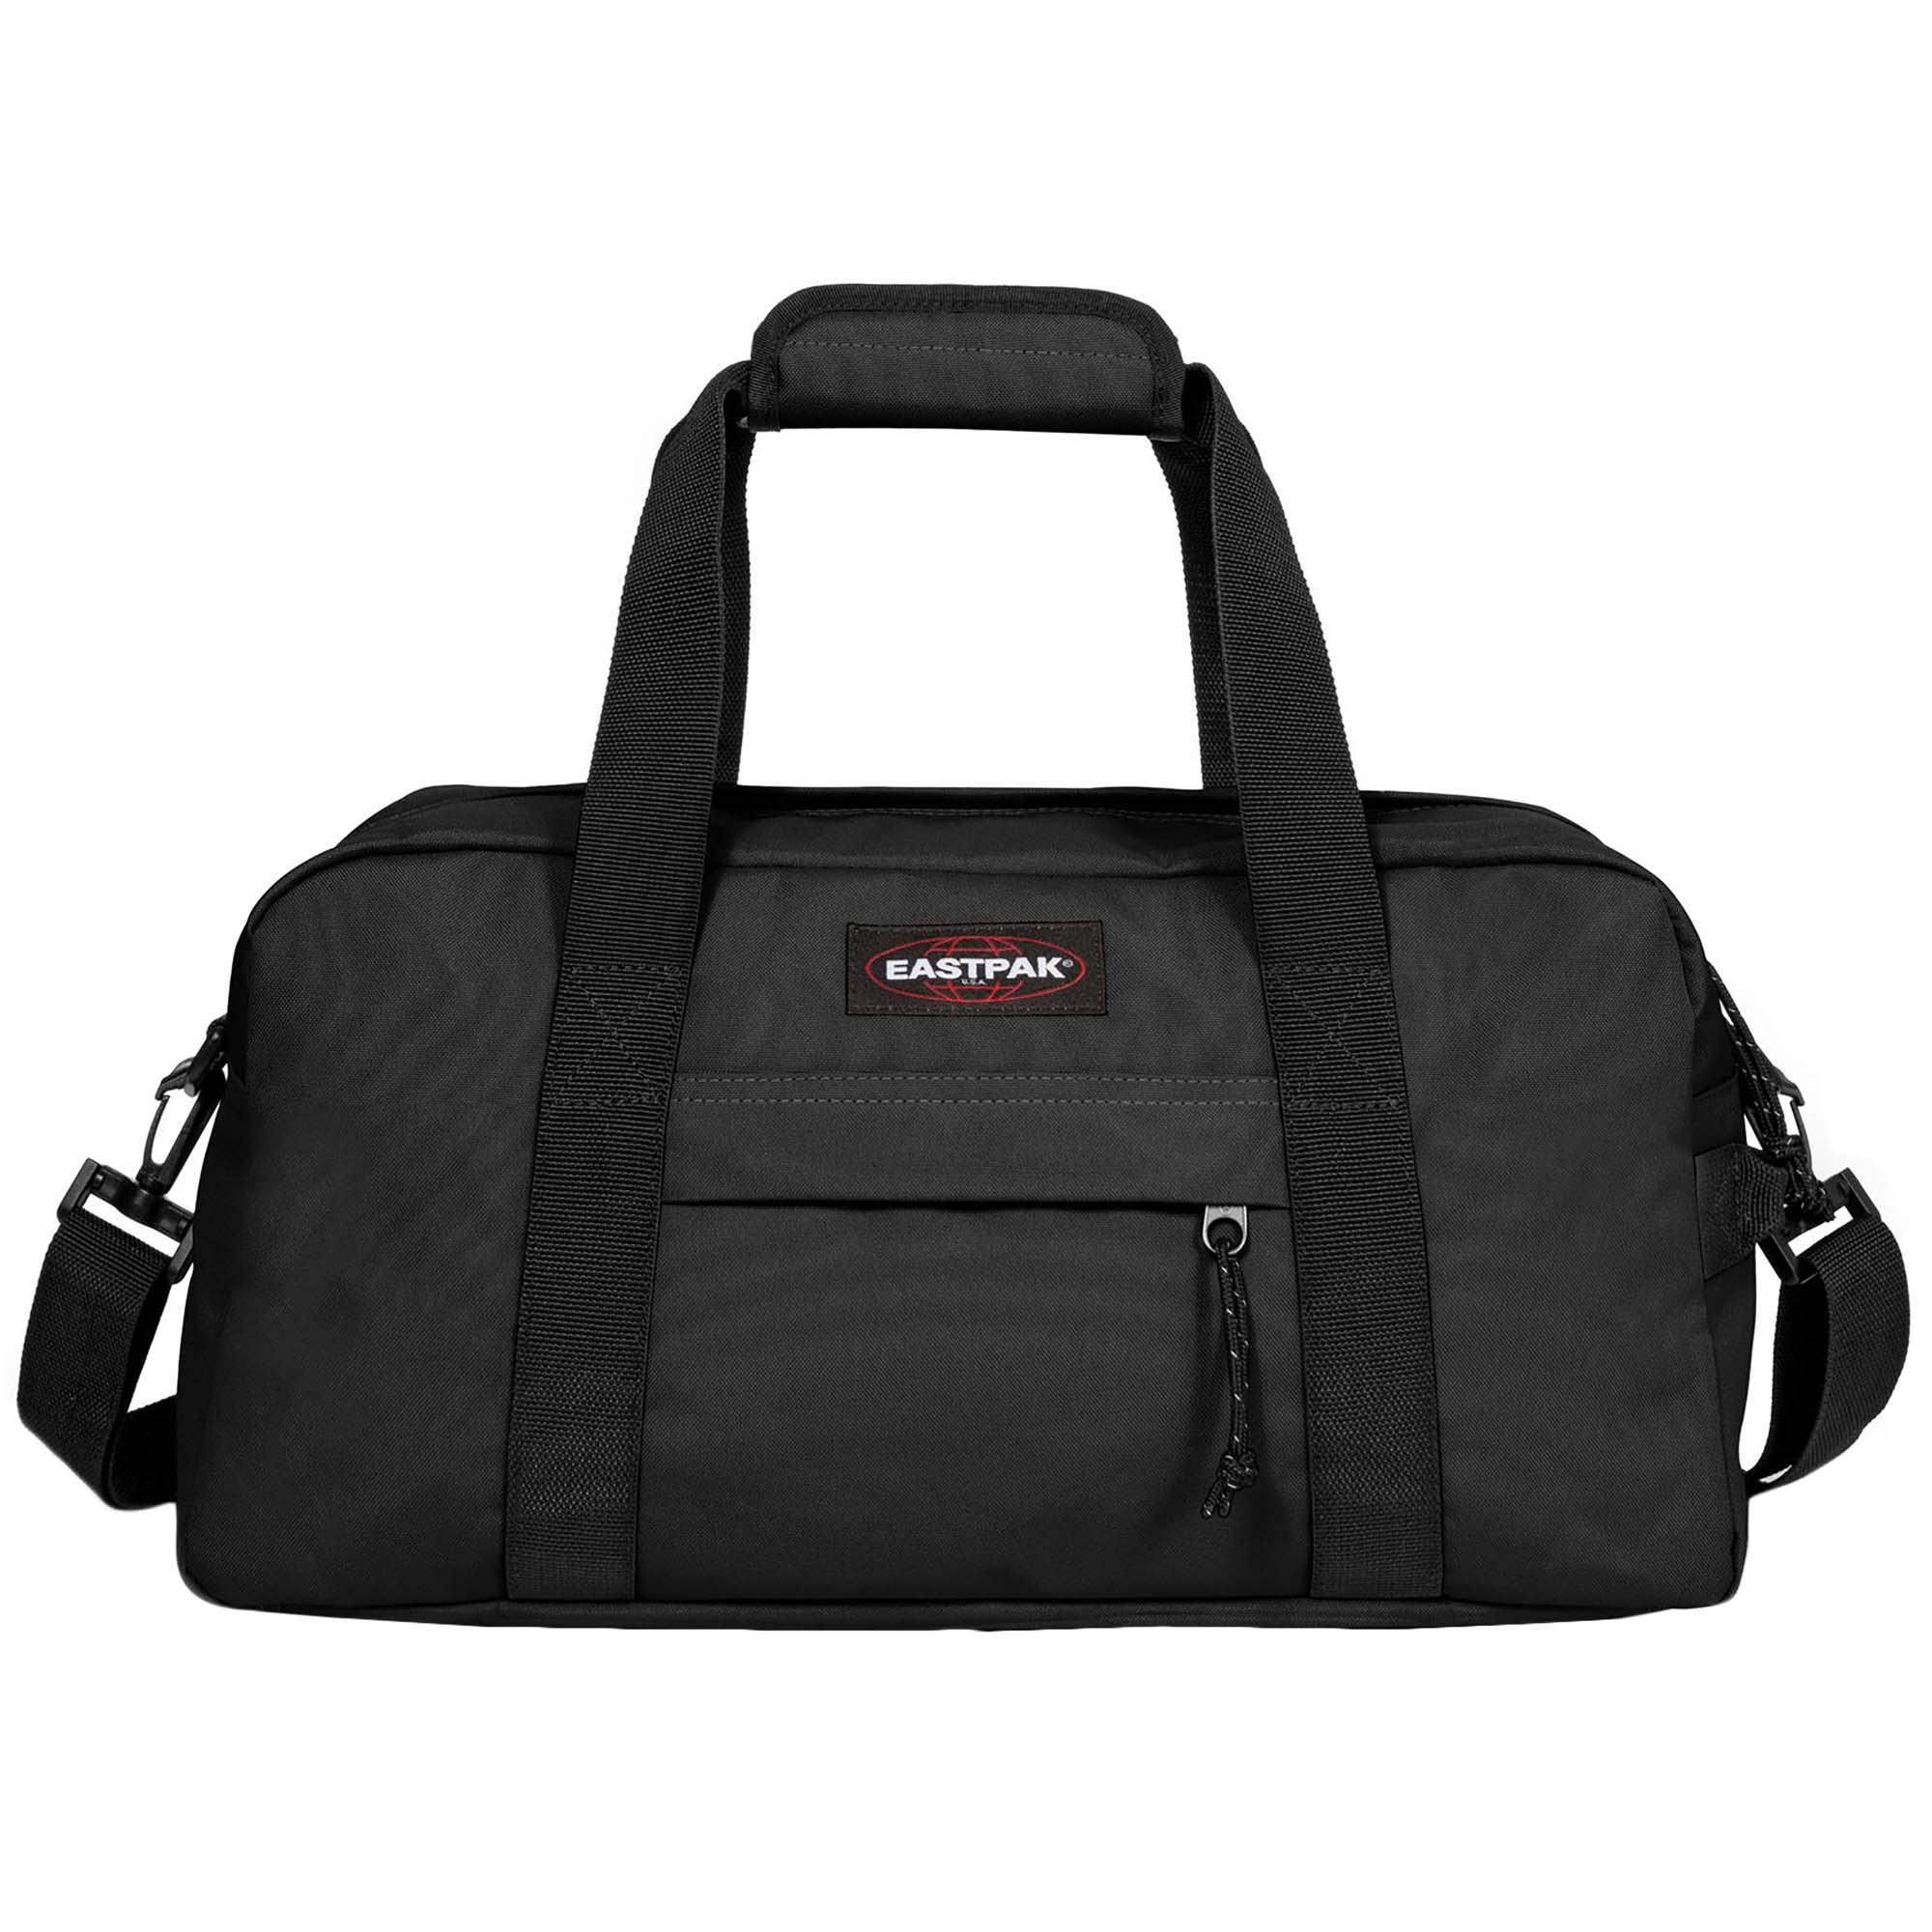 Eastpak Compact+ Duffel Bag